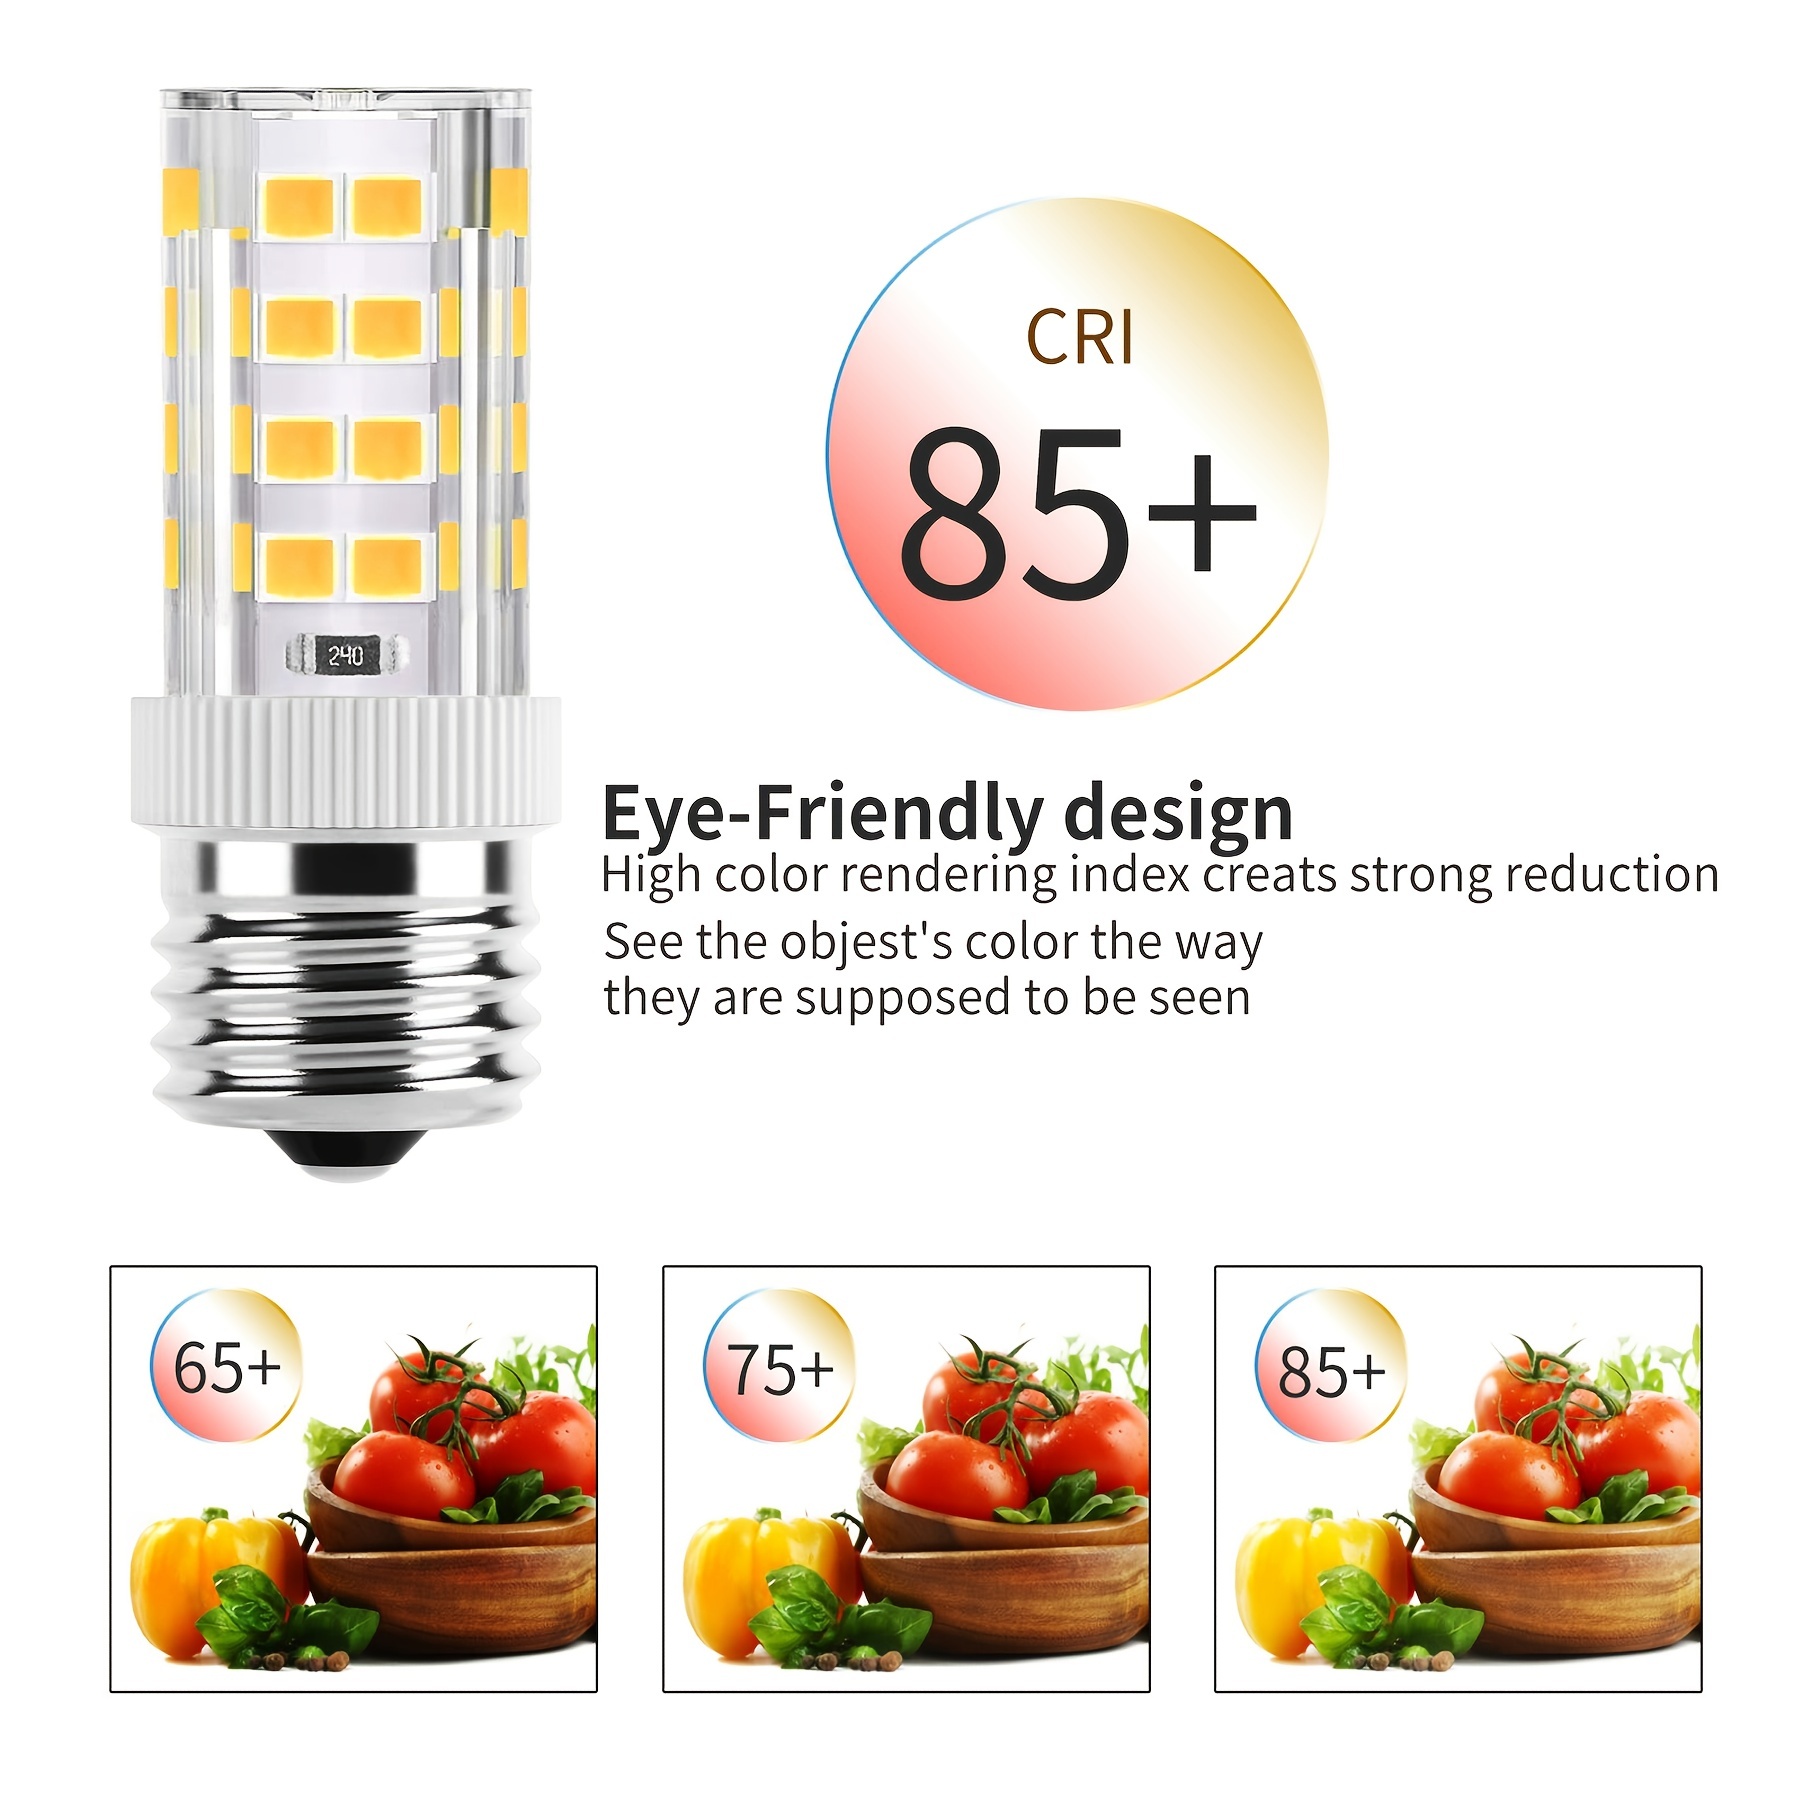 E17 LED Bulb 4W Microwave Oven Light, 40W Halogen Bulb Replacement for Over Stove  Appliance Range Hood Lighting, E17 Intermediate Base (2Pack) - Yahoo  Shopping